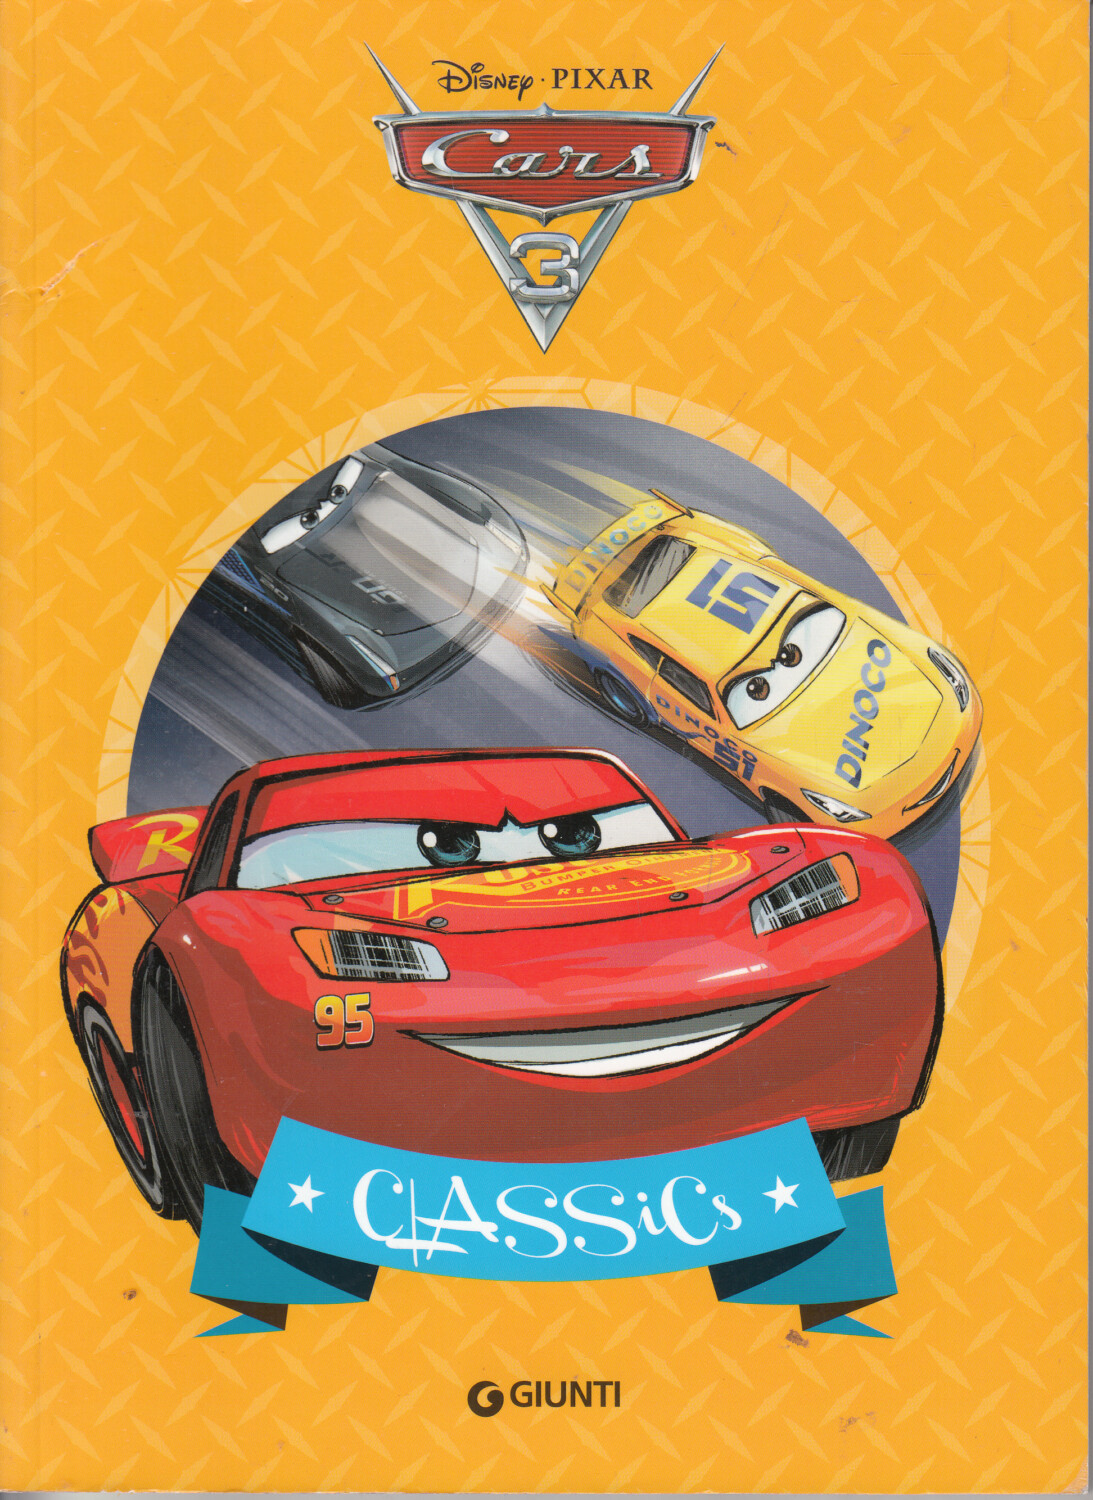 Cars 3 - Classics Disney Pixar ed. Giunti